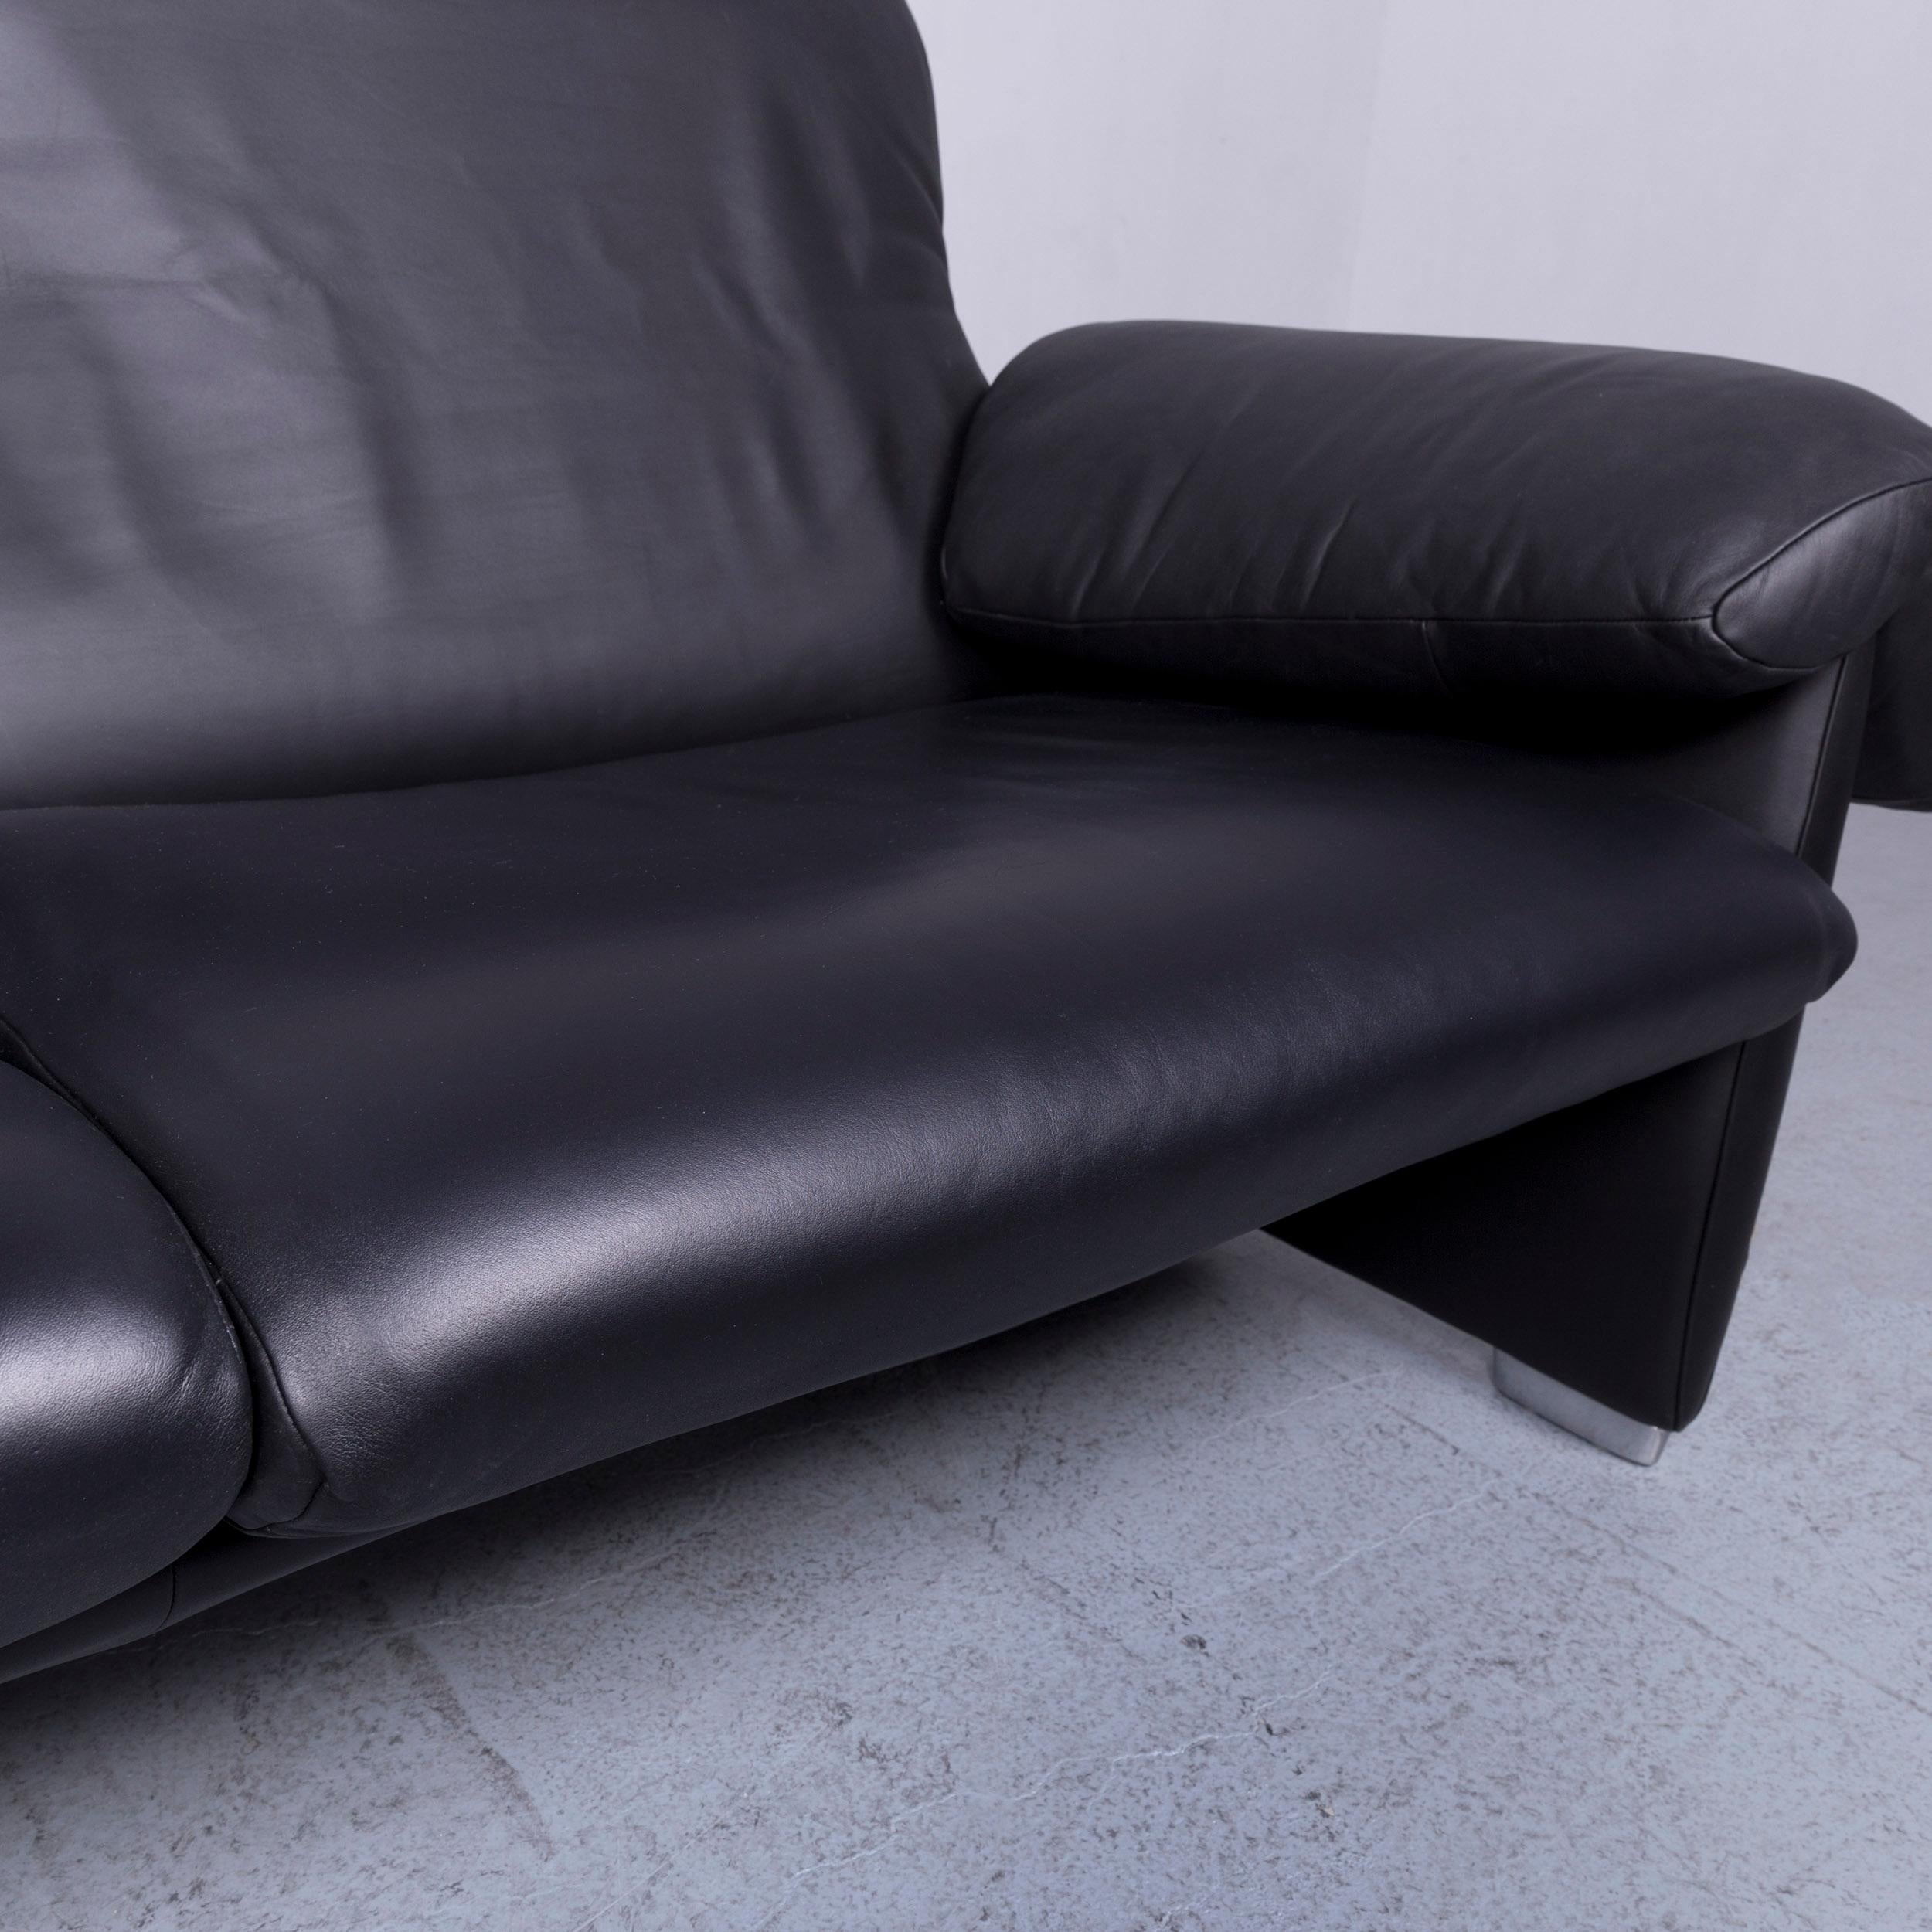 Contemporary De Sede Ds 10 Designer Sofa Black Leather Three-Seat Couch